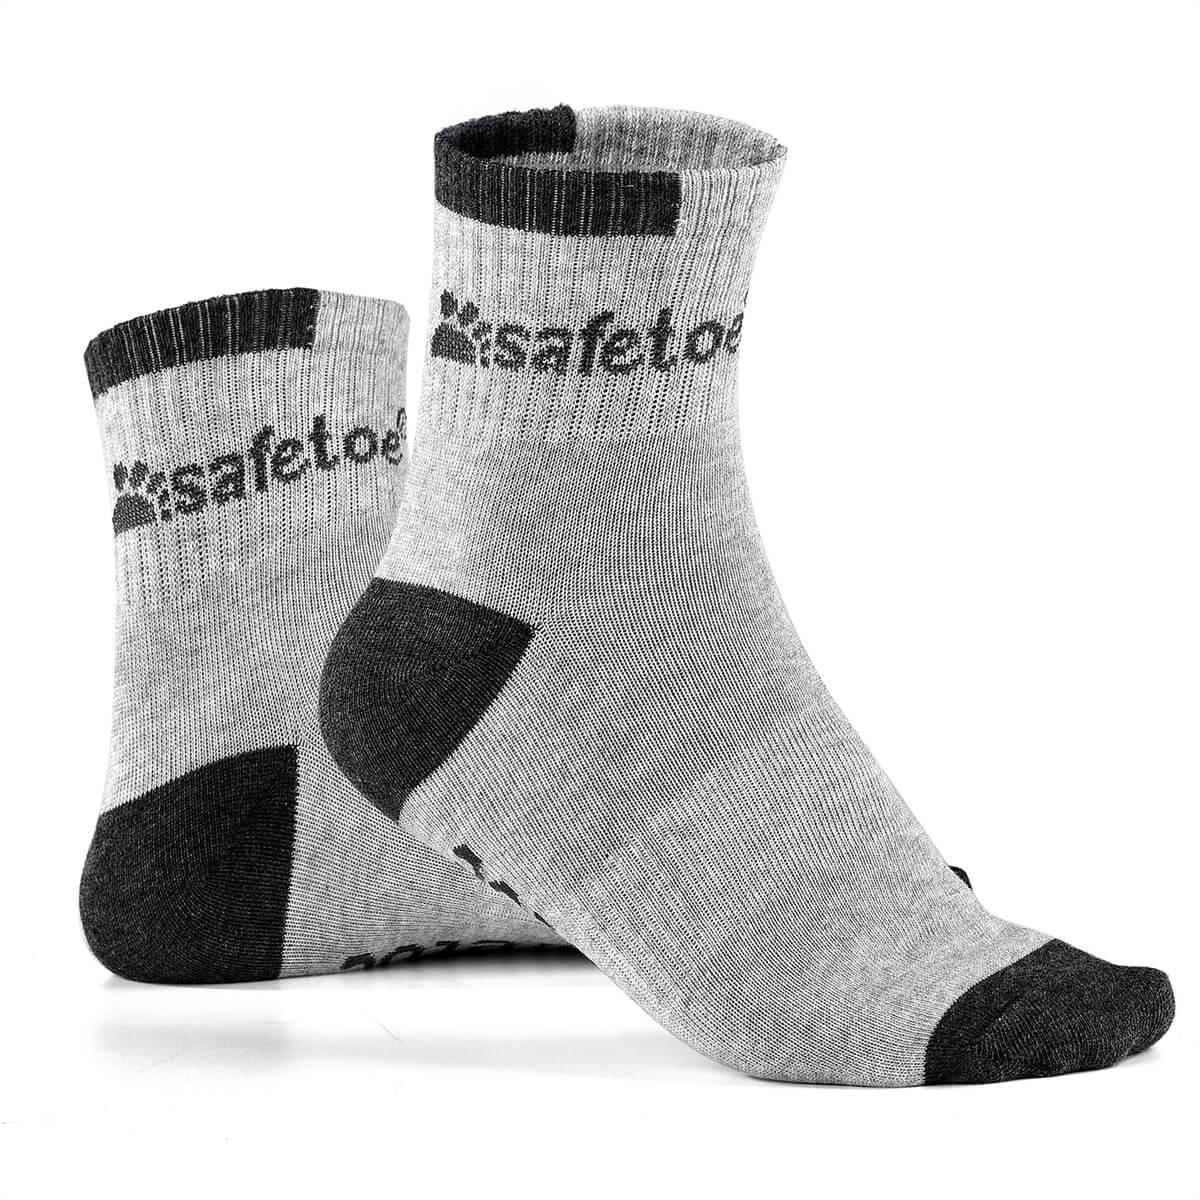 Safetoe 7 Pairs Natural Cotton Socks, Antibacterial Trainer Socks for Men and Women